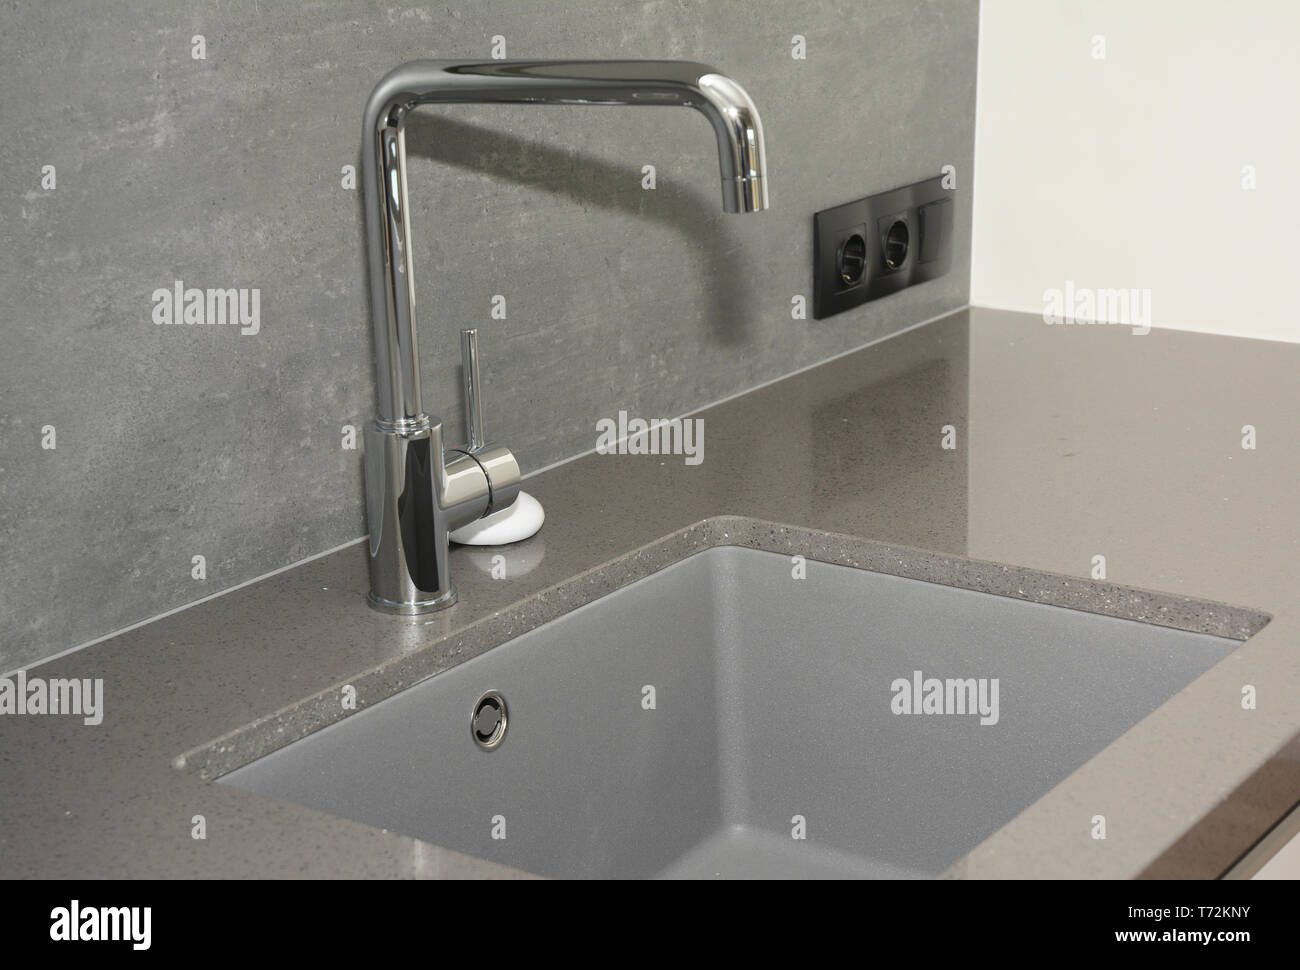 Ceramic kitchen sink. Modern kitchen metal faucet and  ceramic kitchen sink. Stock Photo